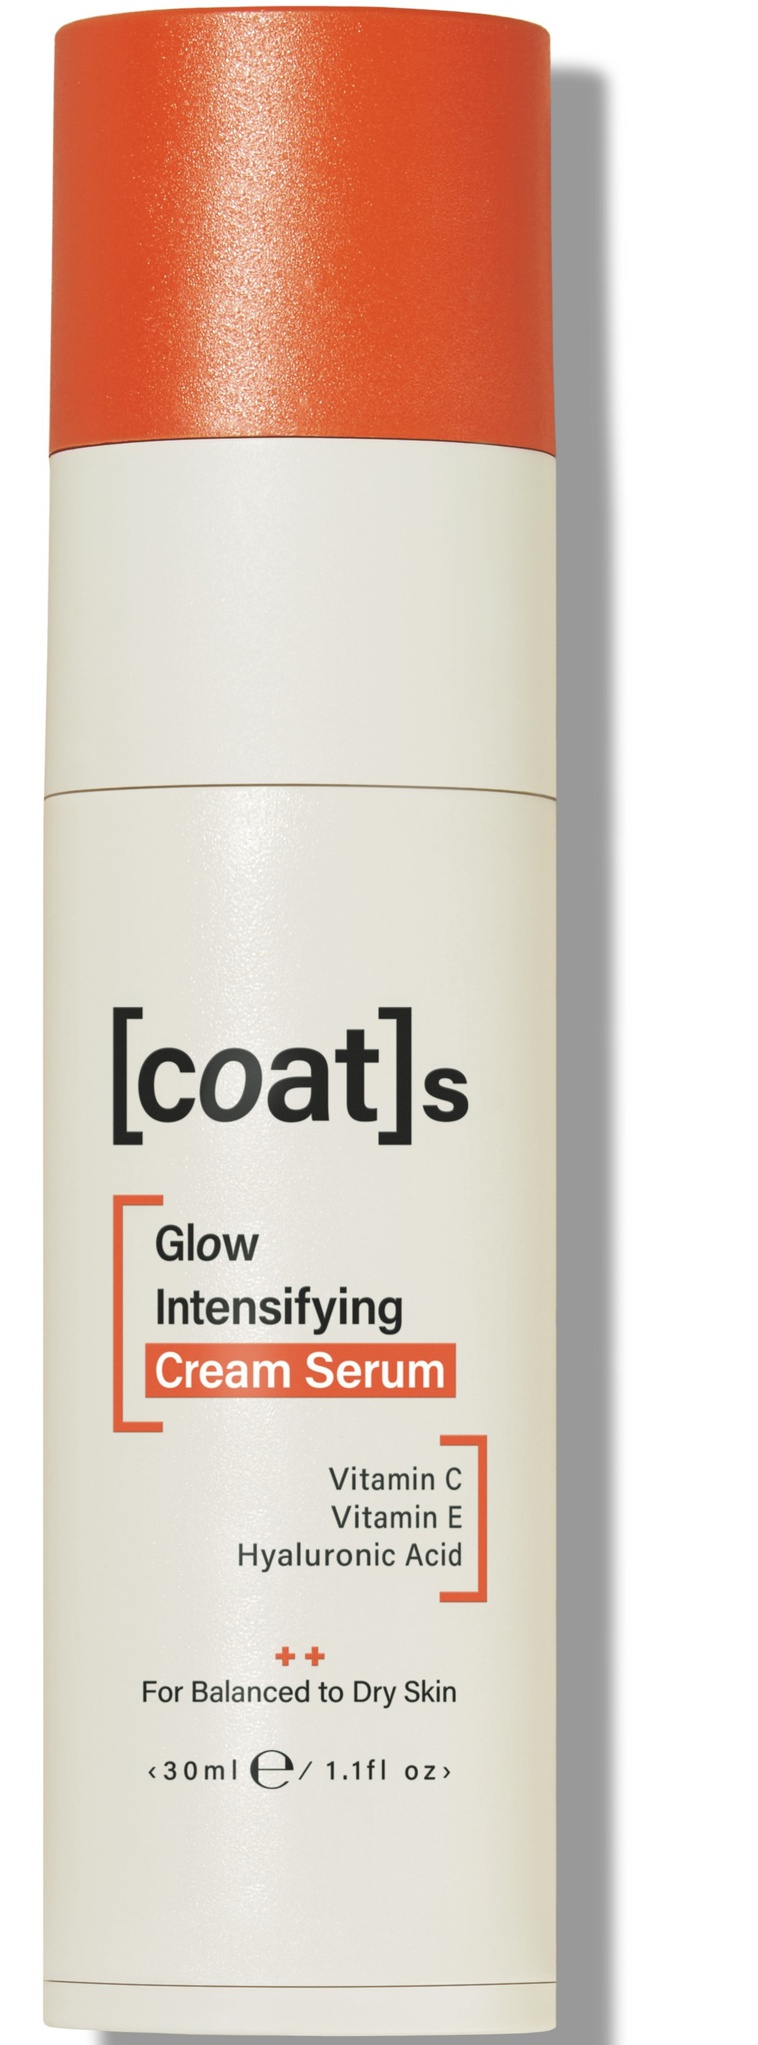 [coat]s Glow Intensifying Cream Serum